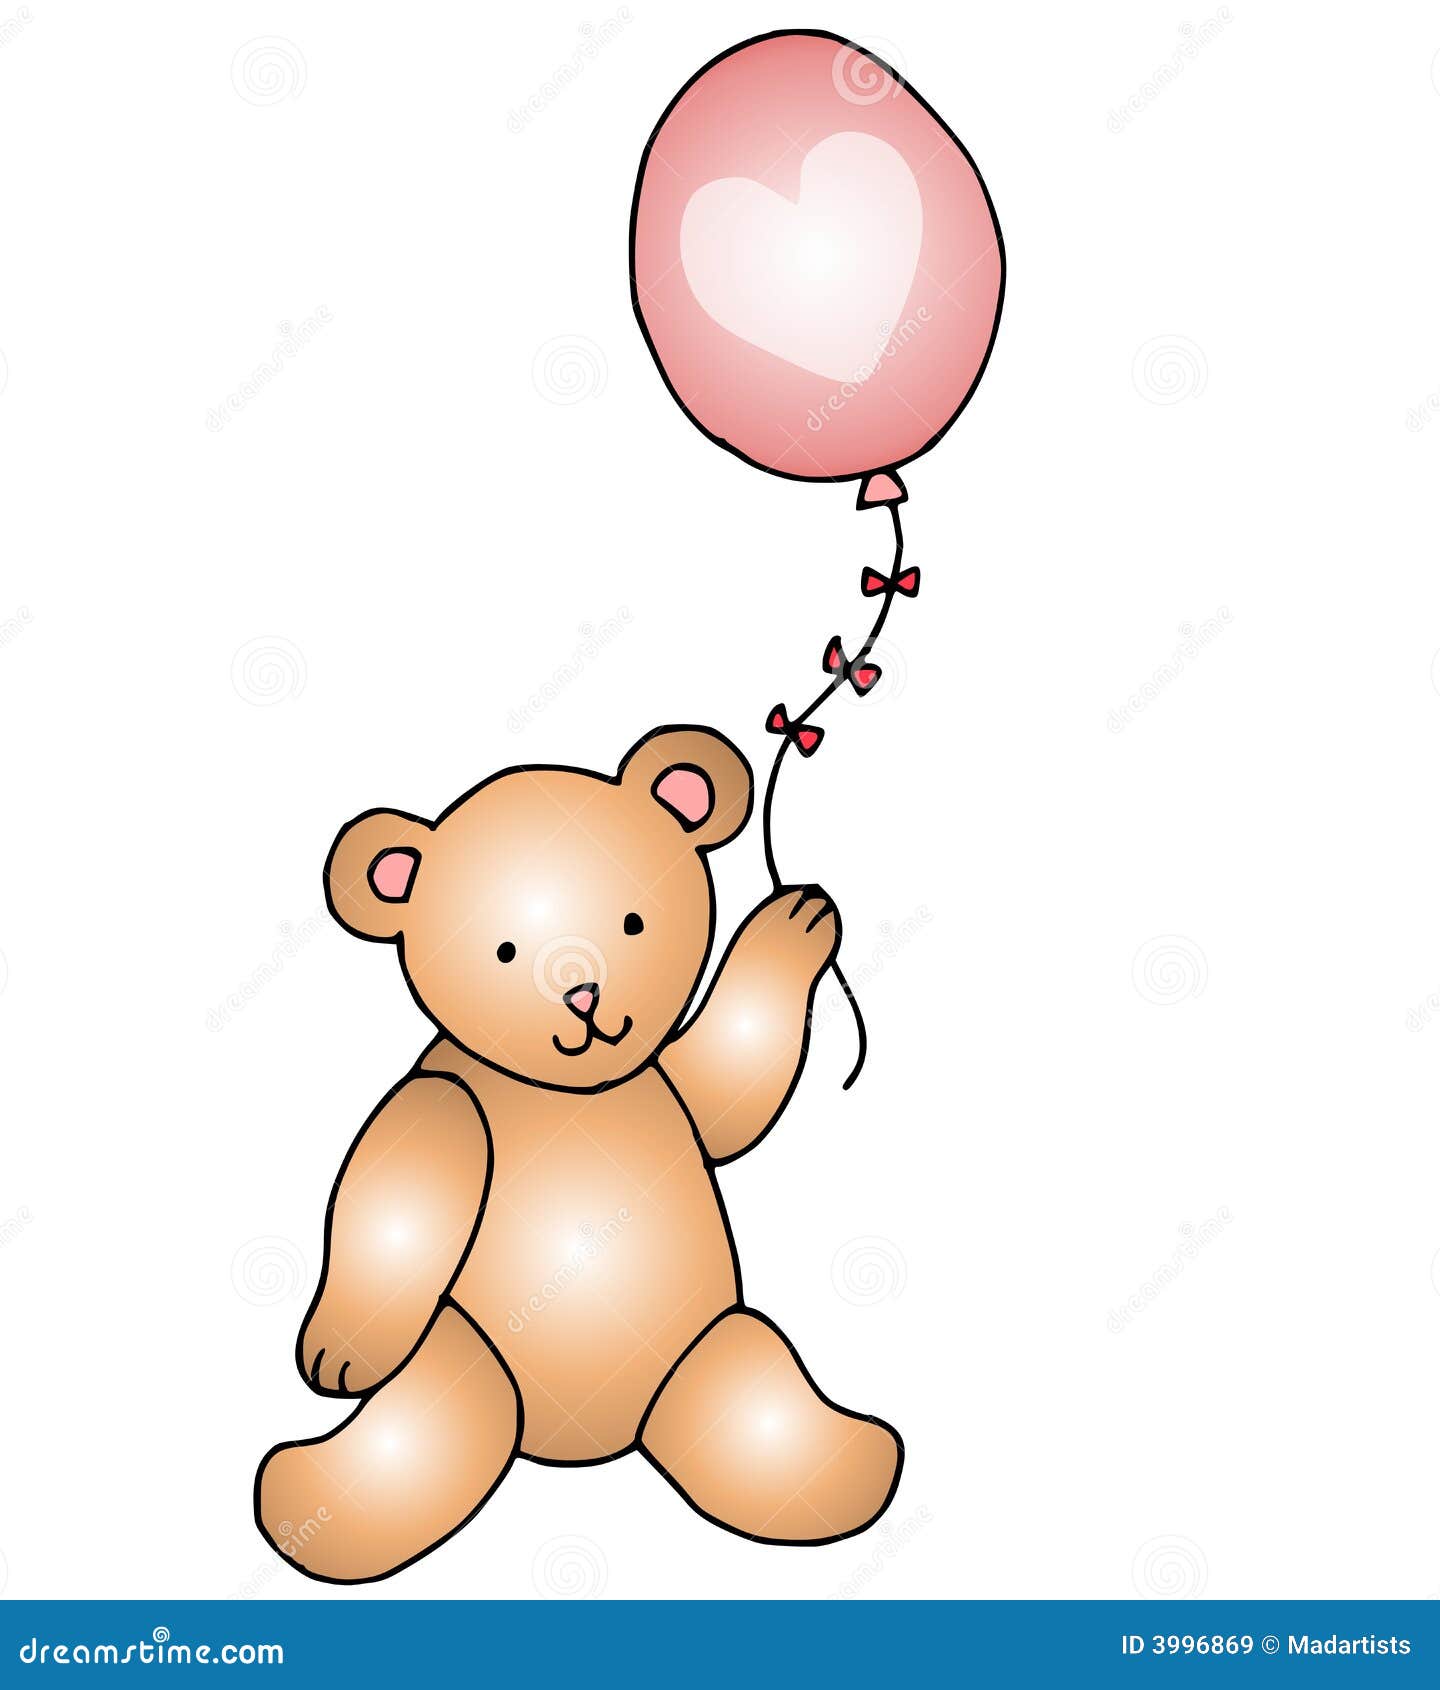 teddy bear with balloons clipart - photo #6